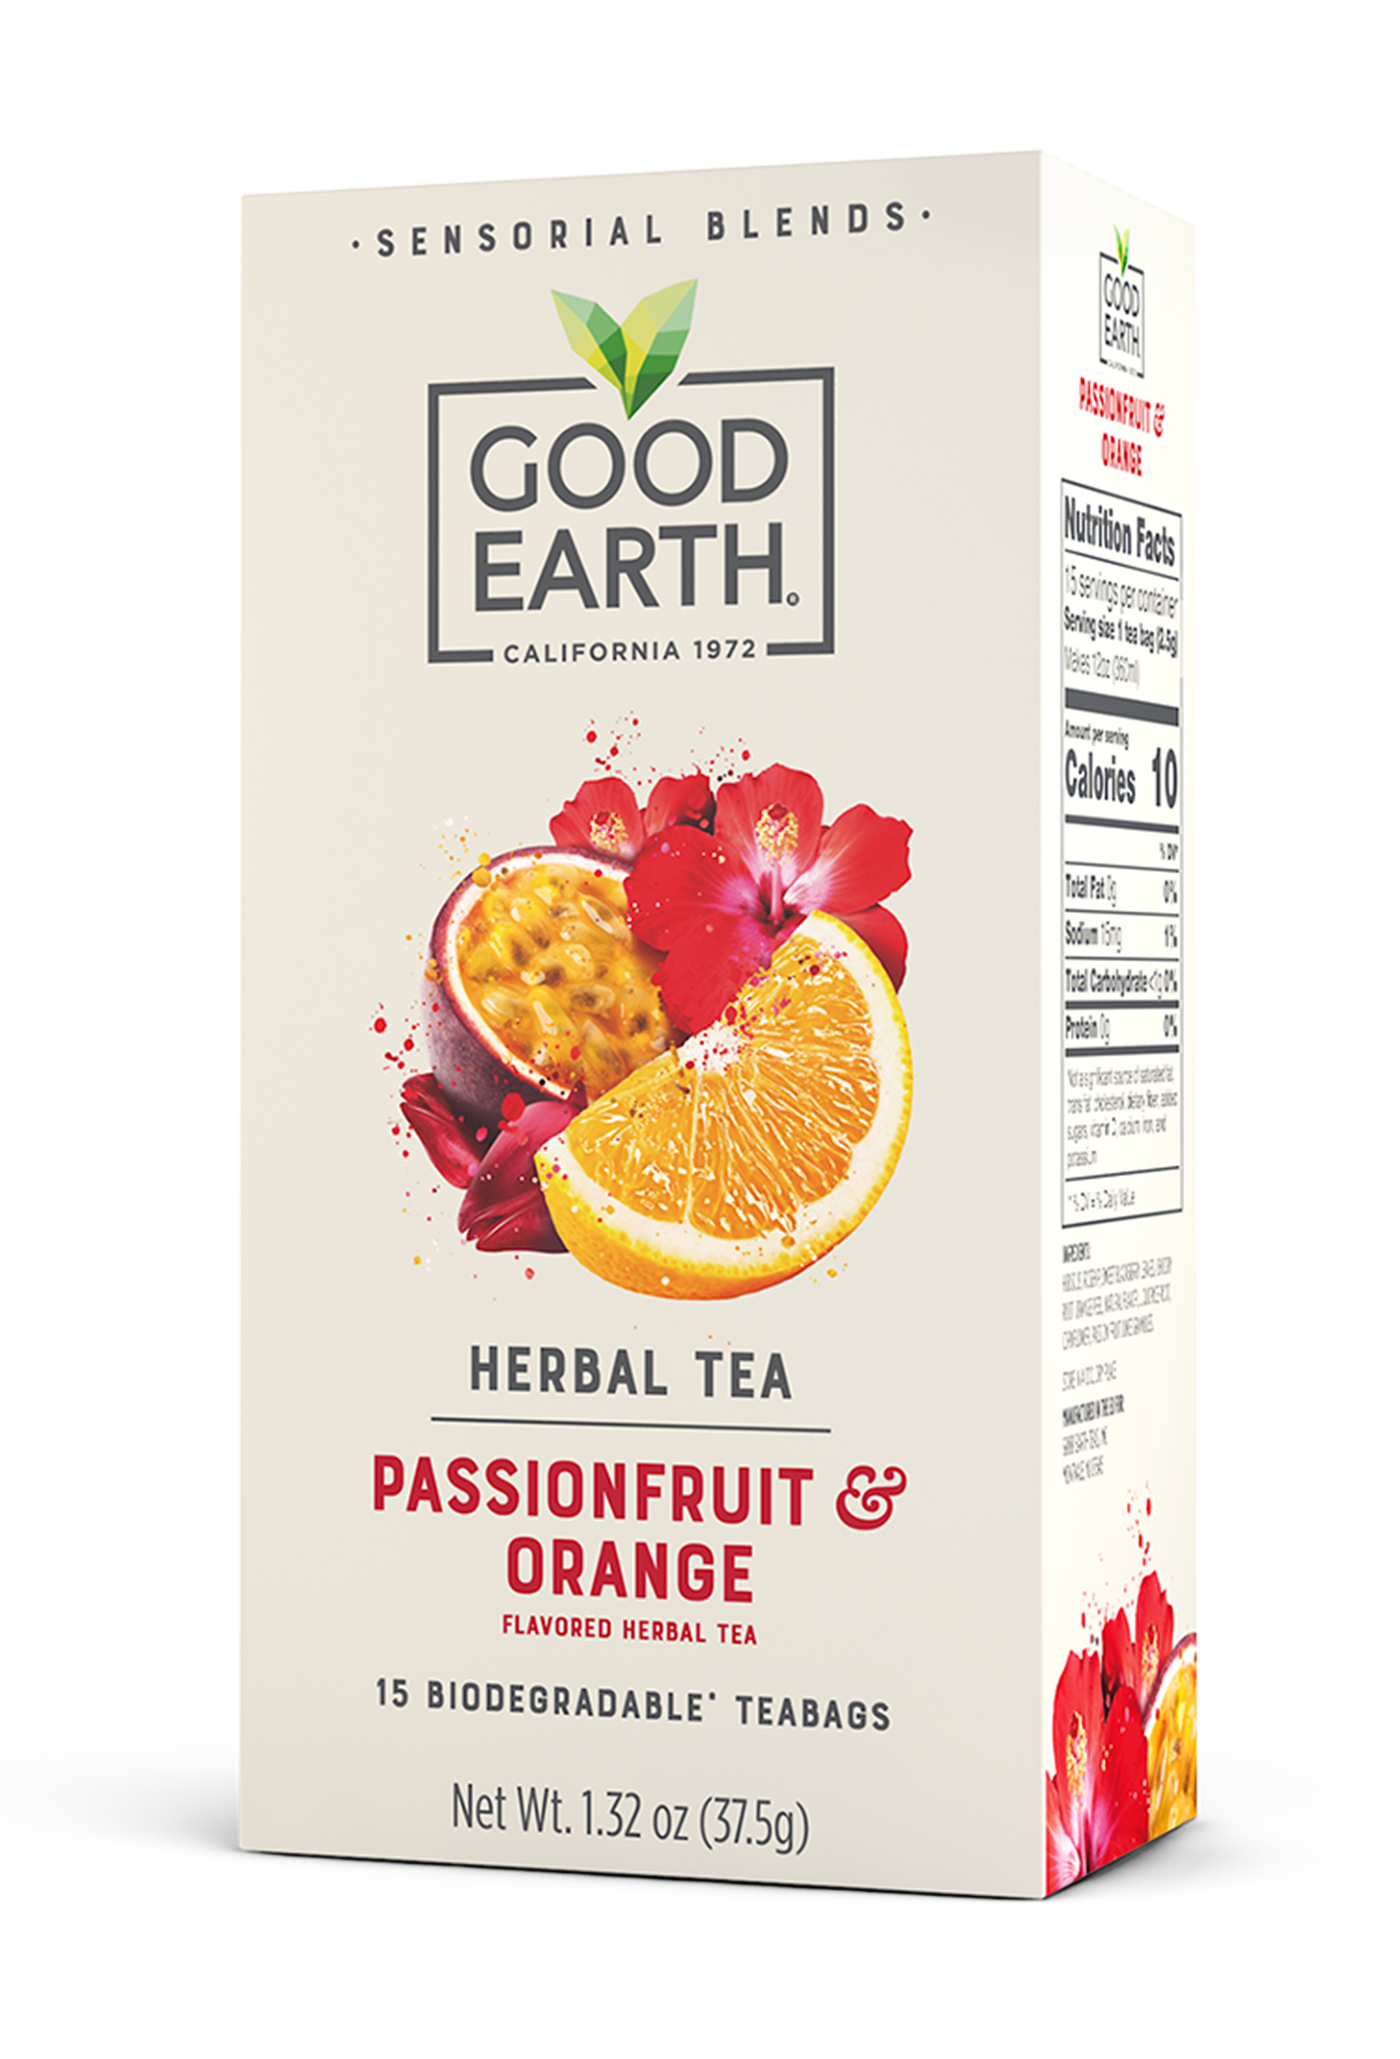 Passionfruit & Orange packaging